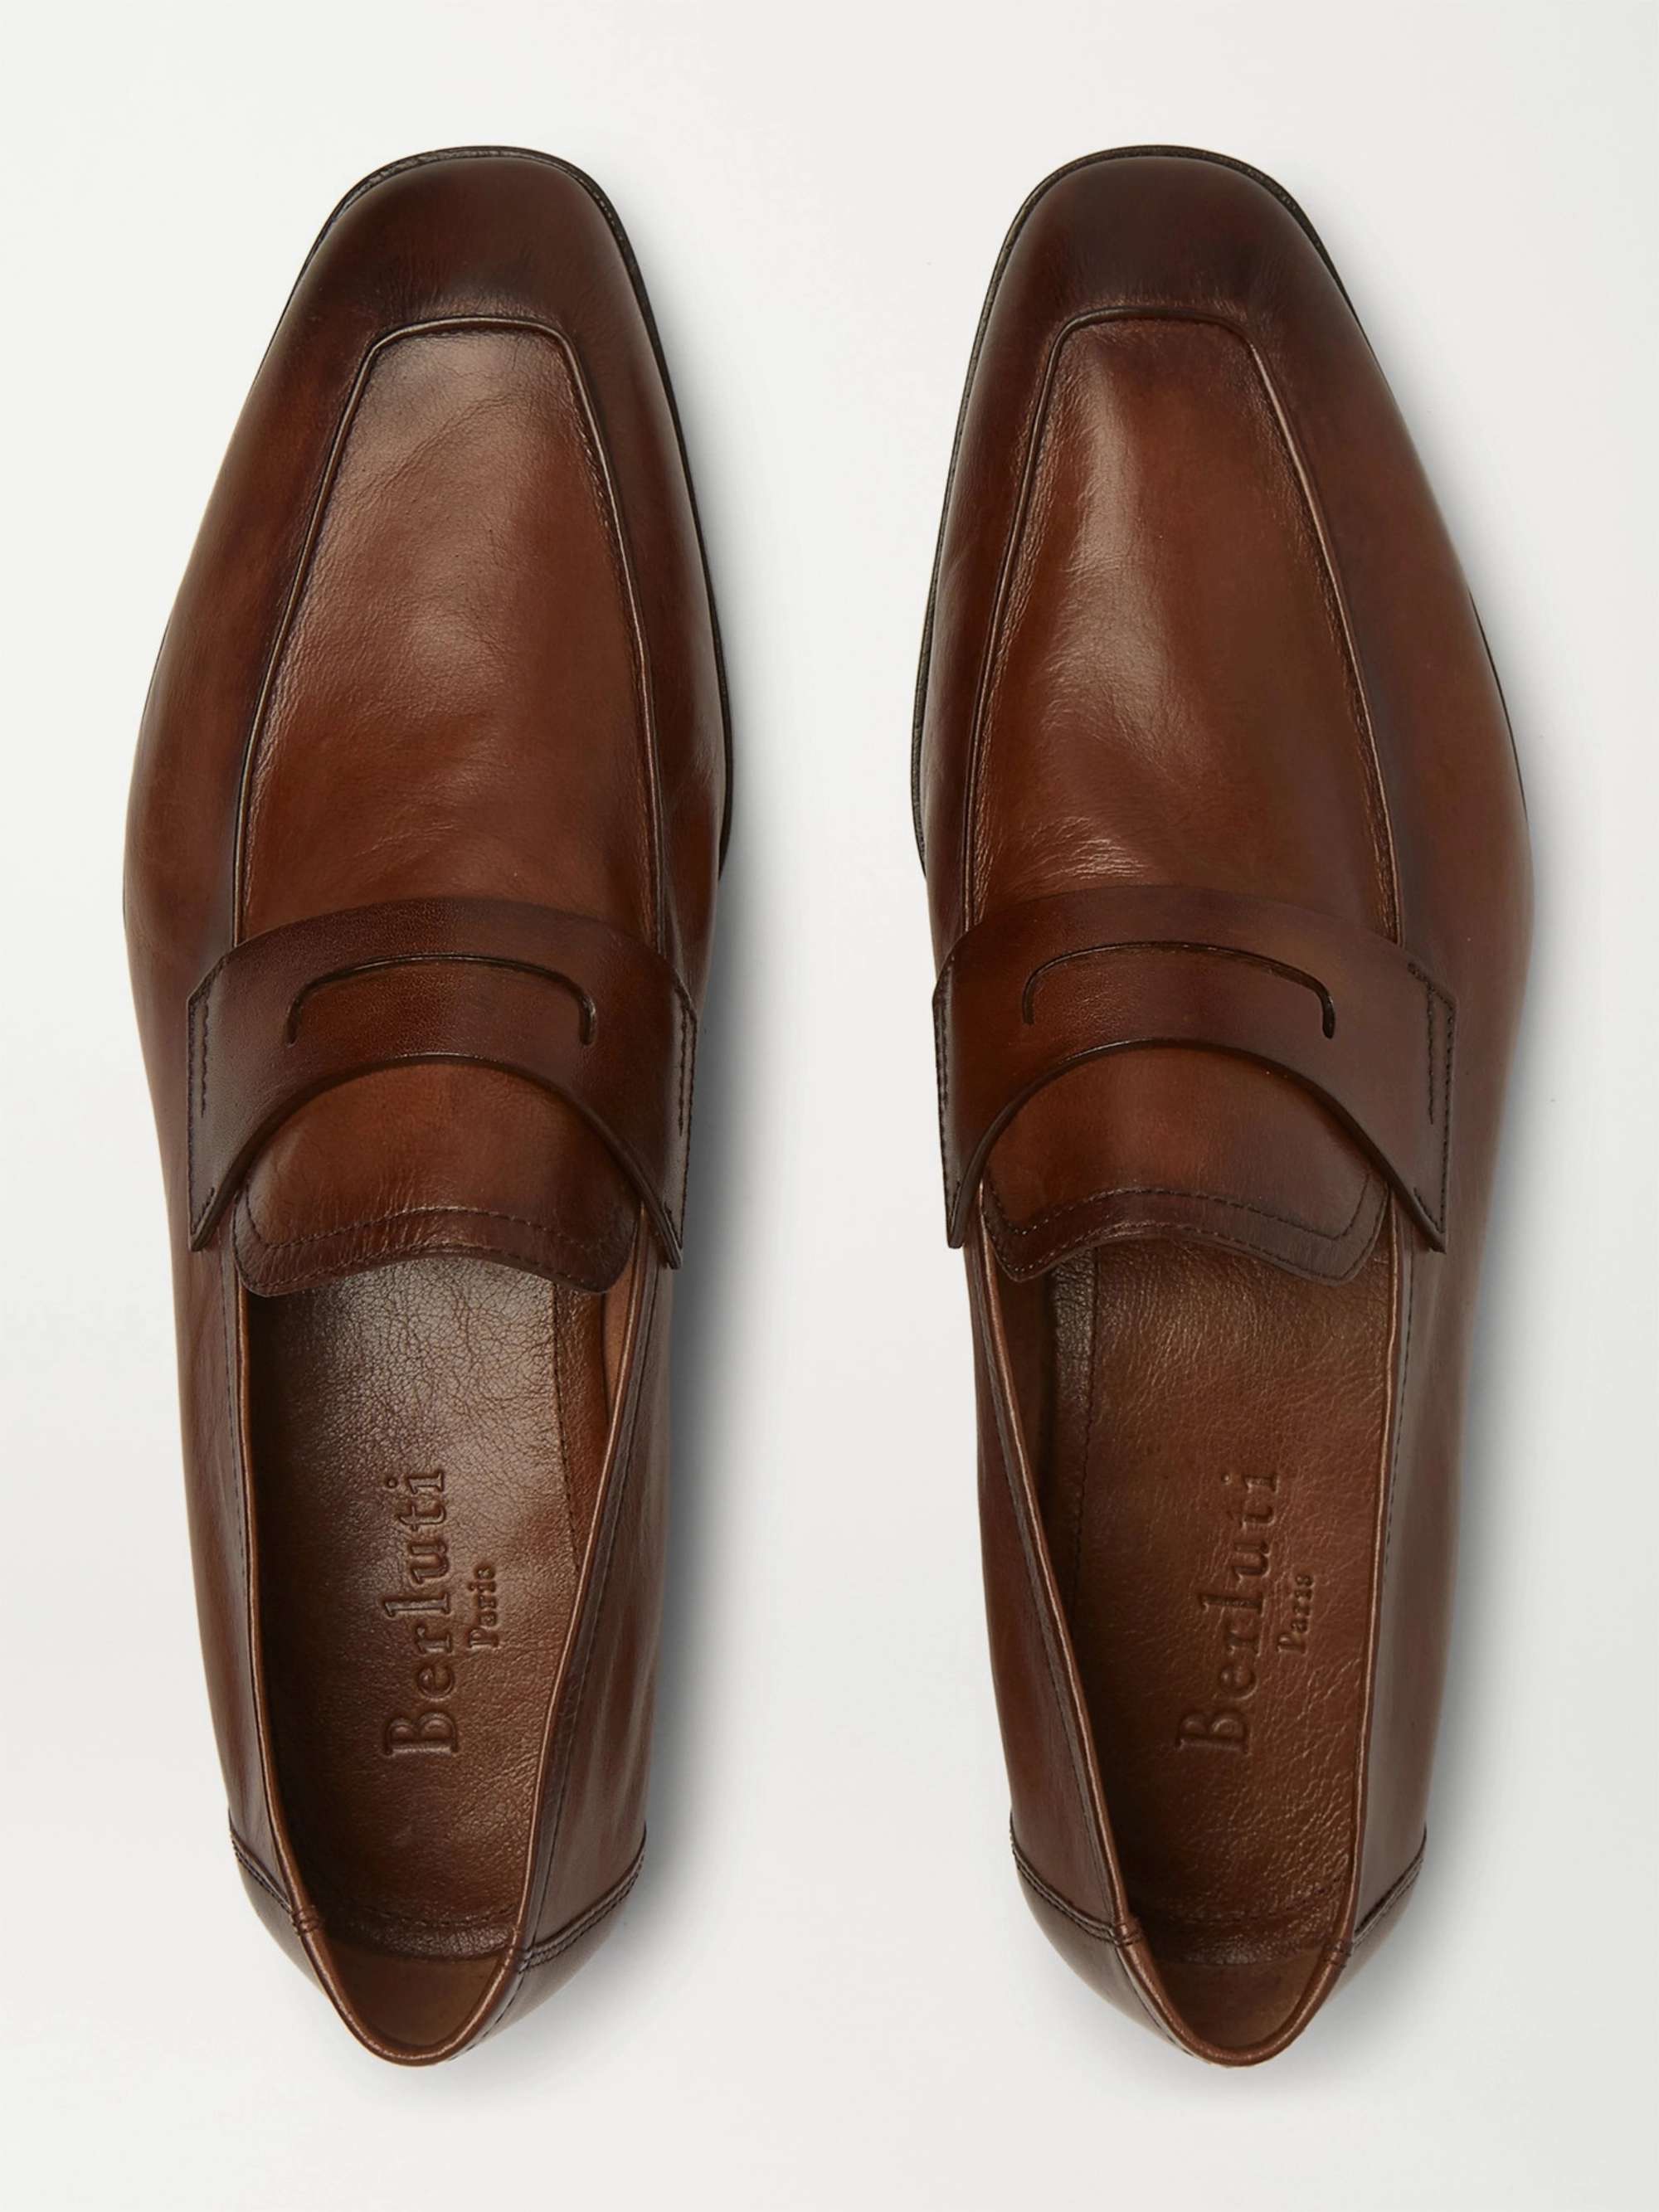 BERLUTI Lorenzo Leather Loafers